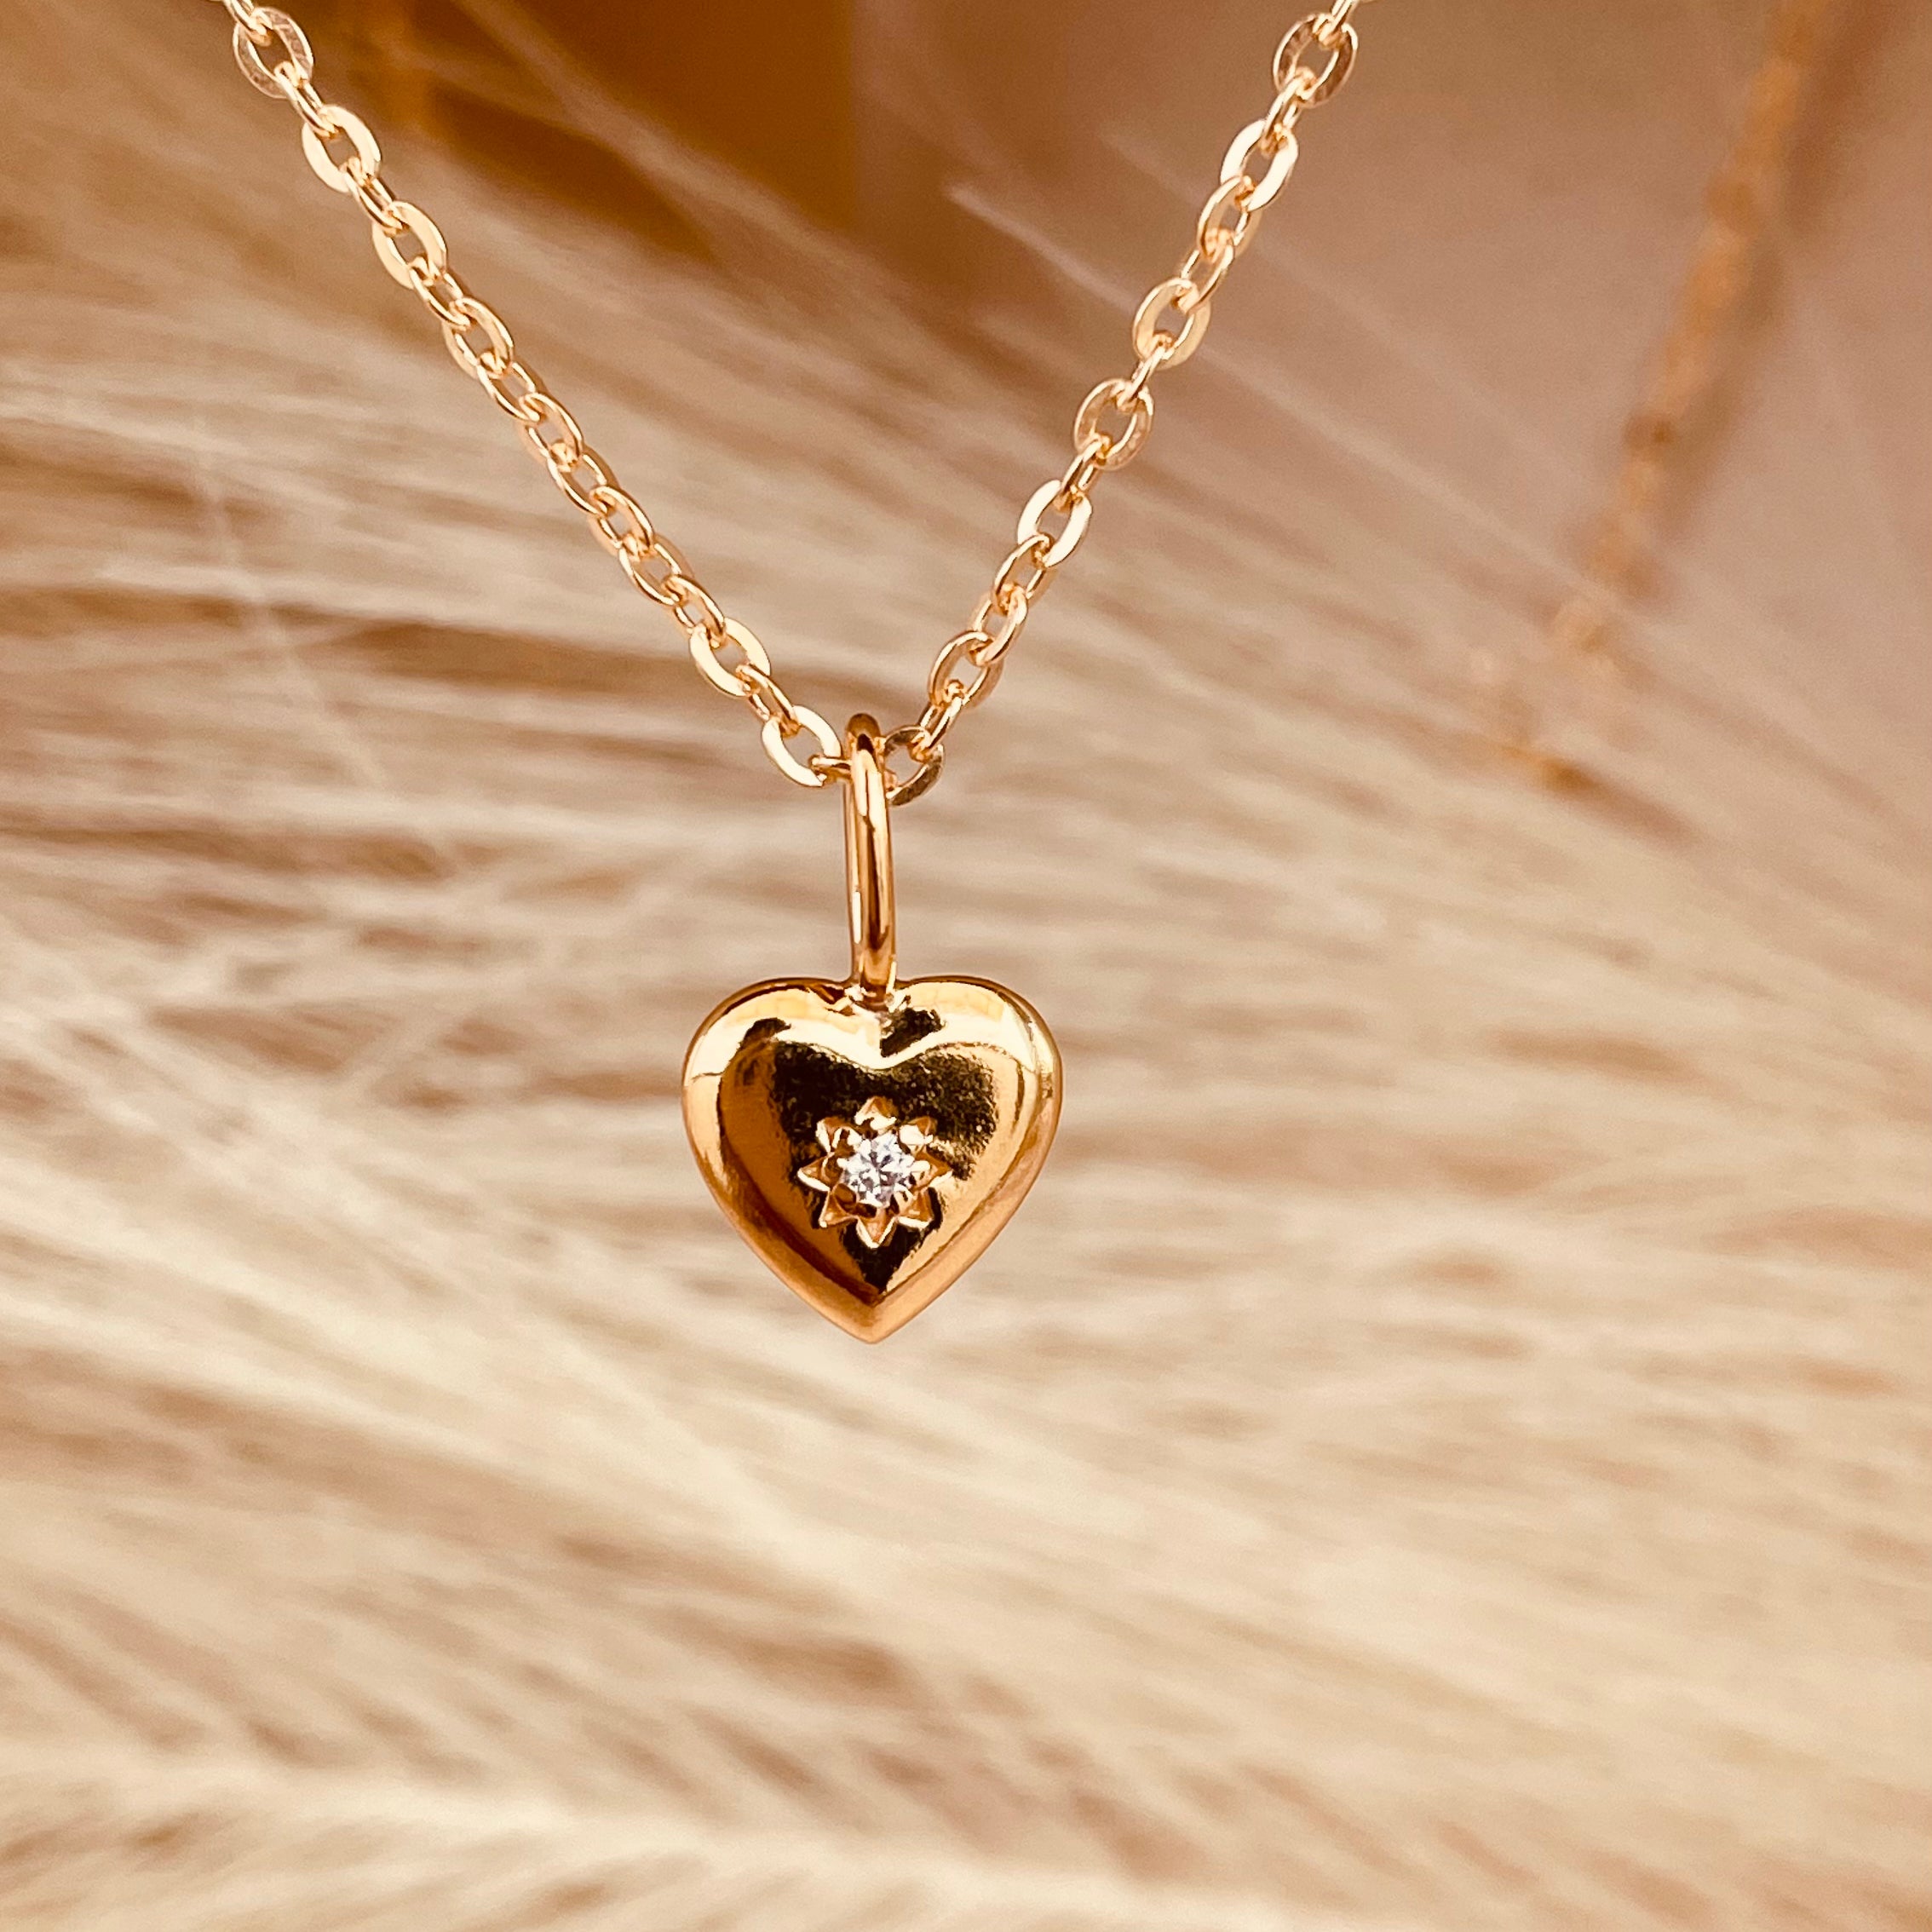 Dainty Vintage Heart Necklace with Sitara Chain - Octonov 